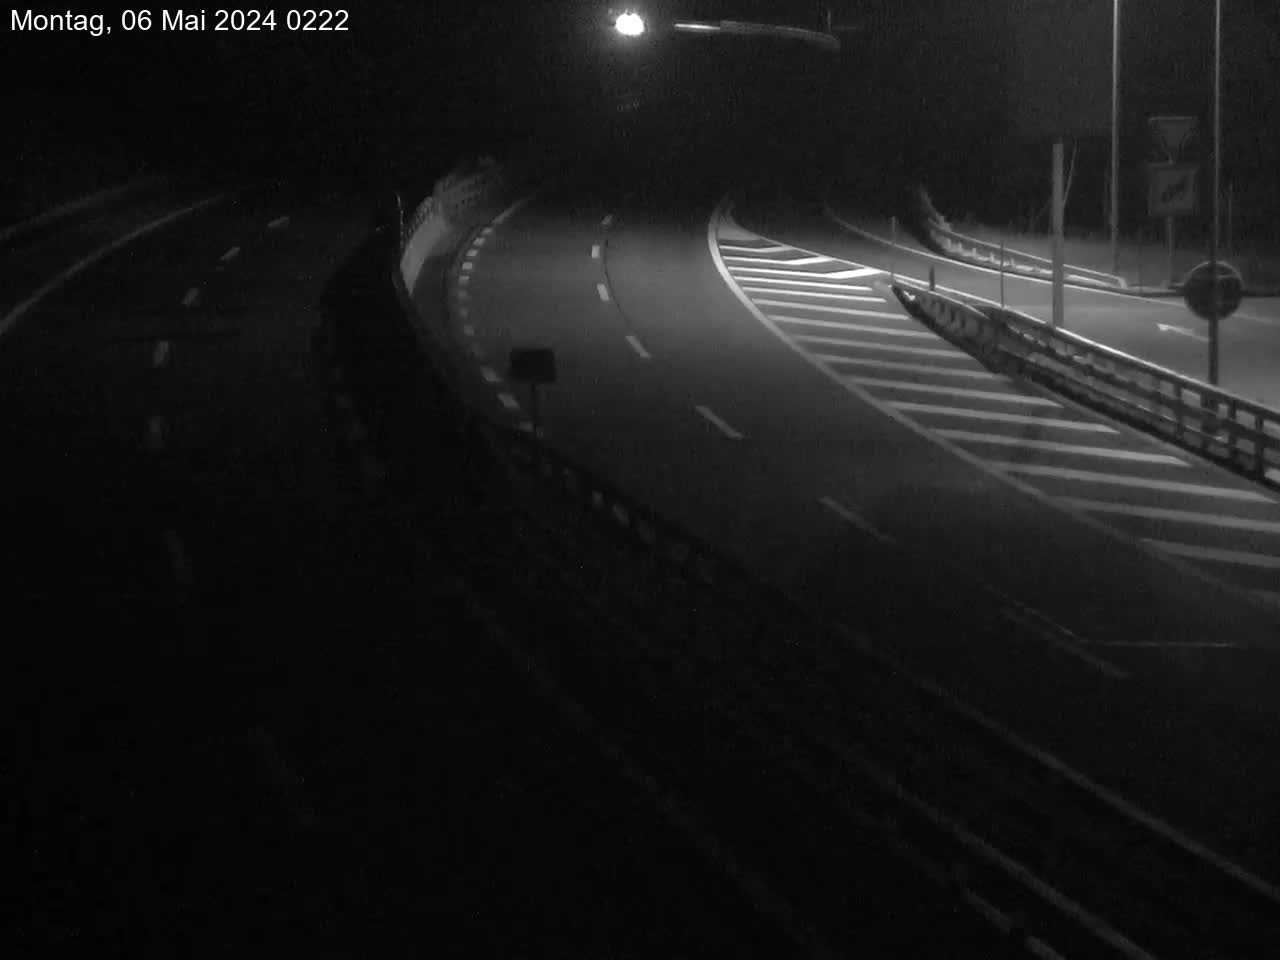 Live Traffic Webcam at WASSEN, 4 km from Gotthard tunnel